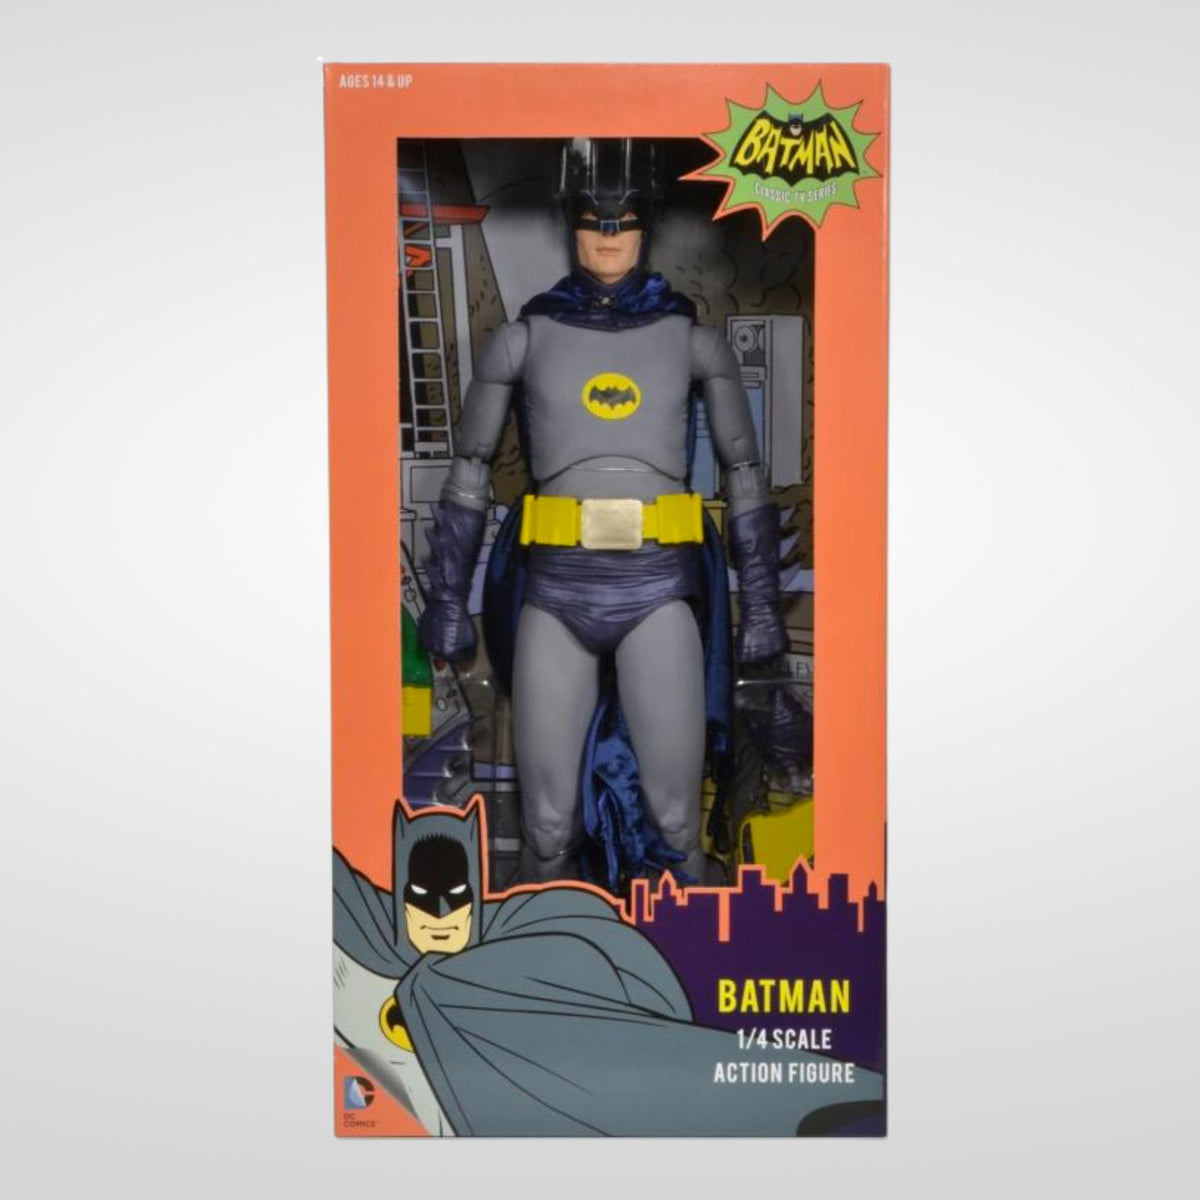 Fairy Batman Custom DC Comics Superhero Minifigure – Minifigure Bricks